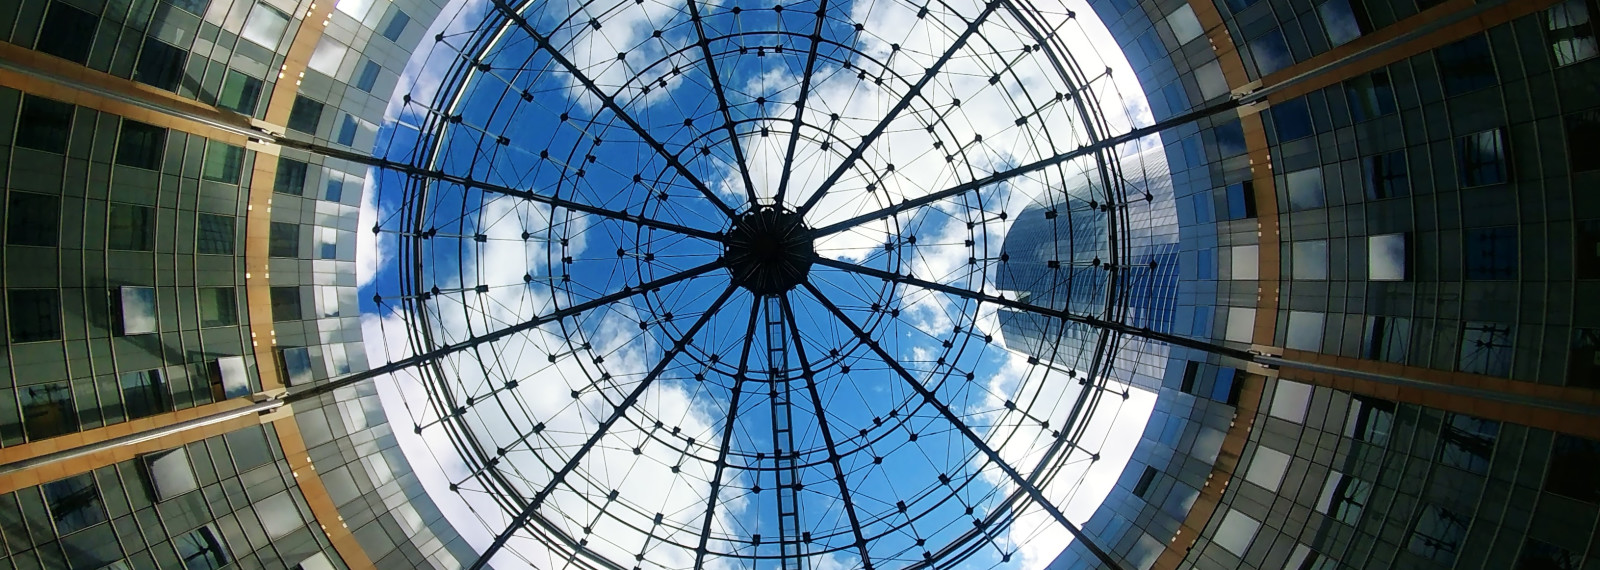 Image looking up at the sky through a circular building